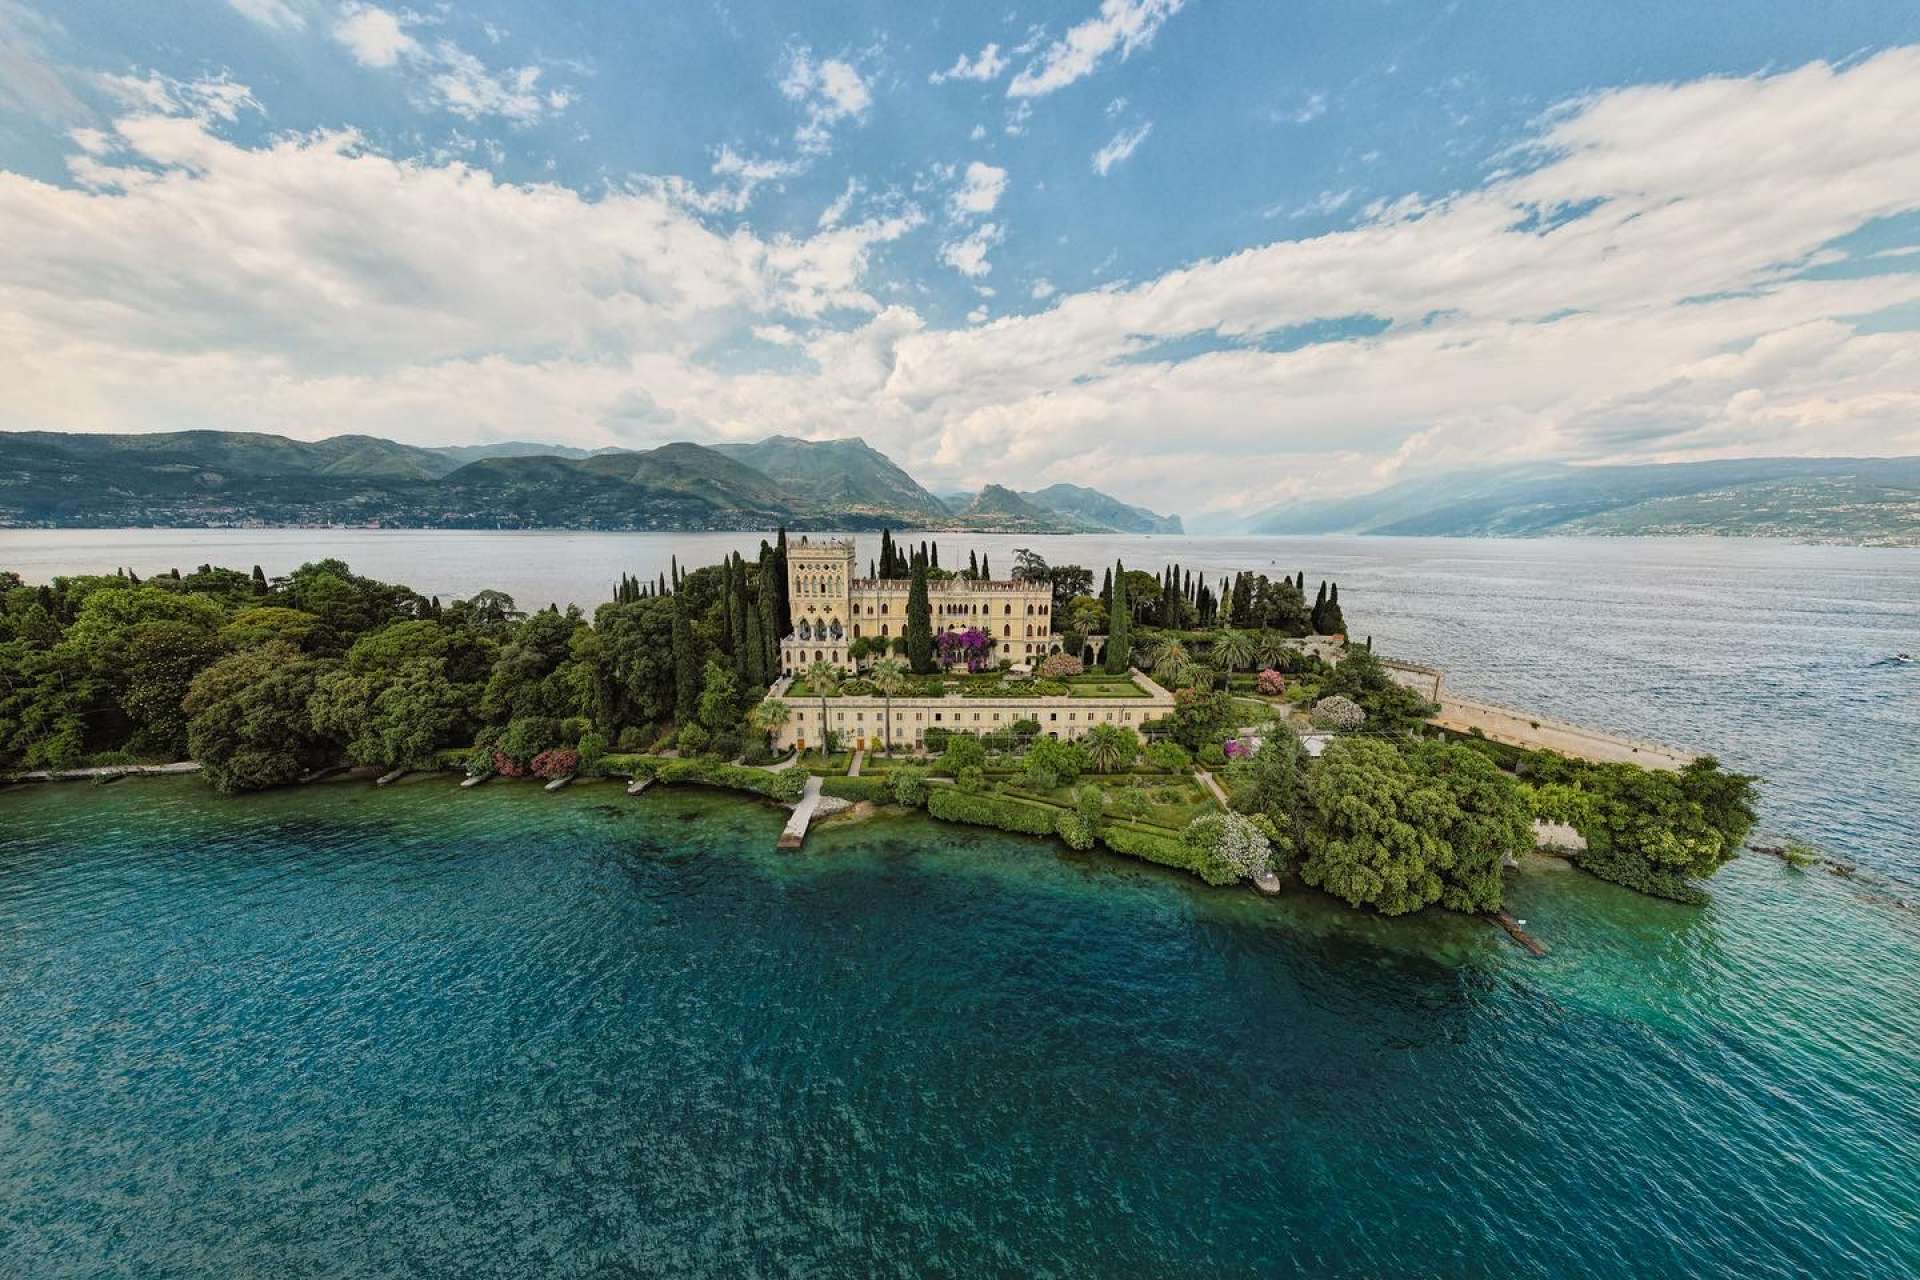 Wedding at Lake Garda: Guide for your Italian dream wedding